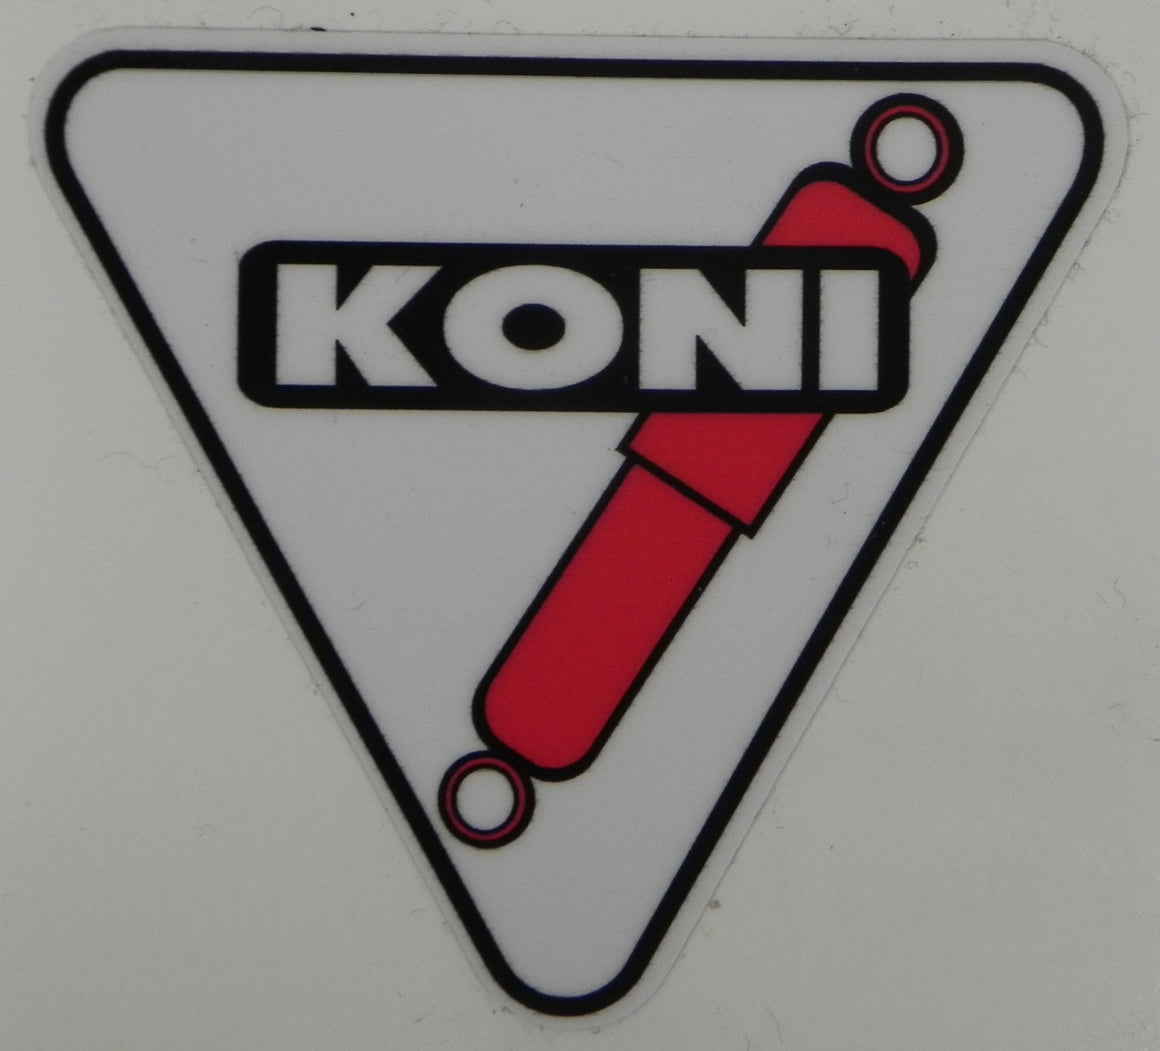 (New) Koni Shock Absorber Decal 5cm